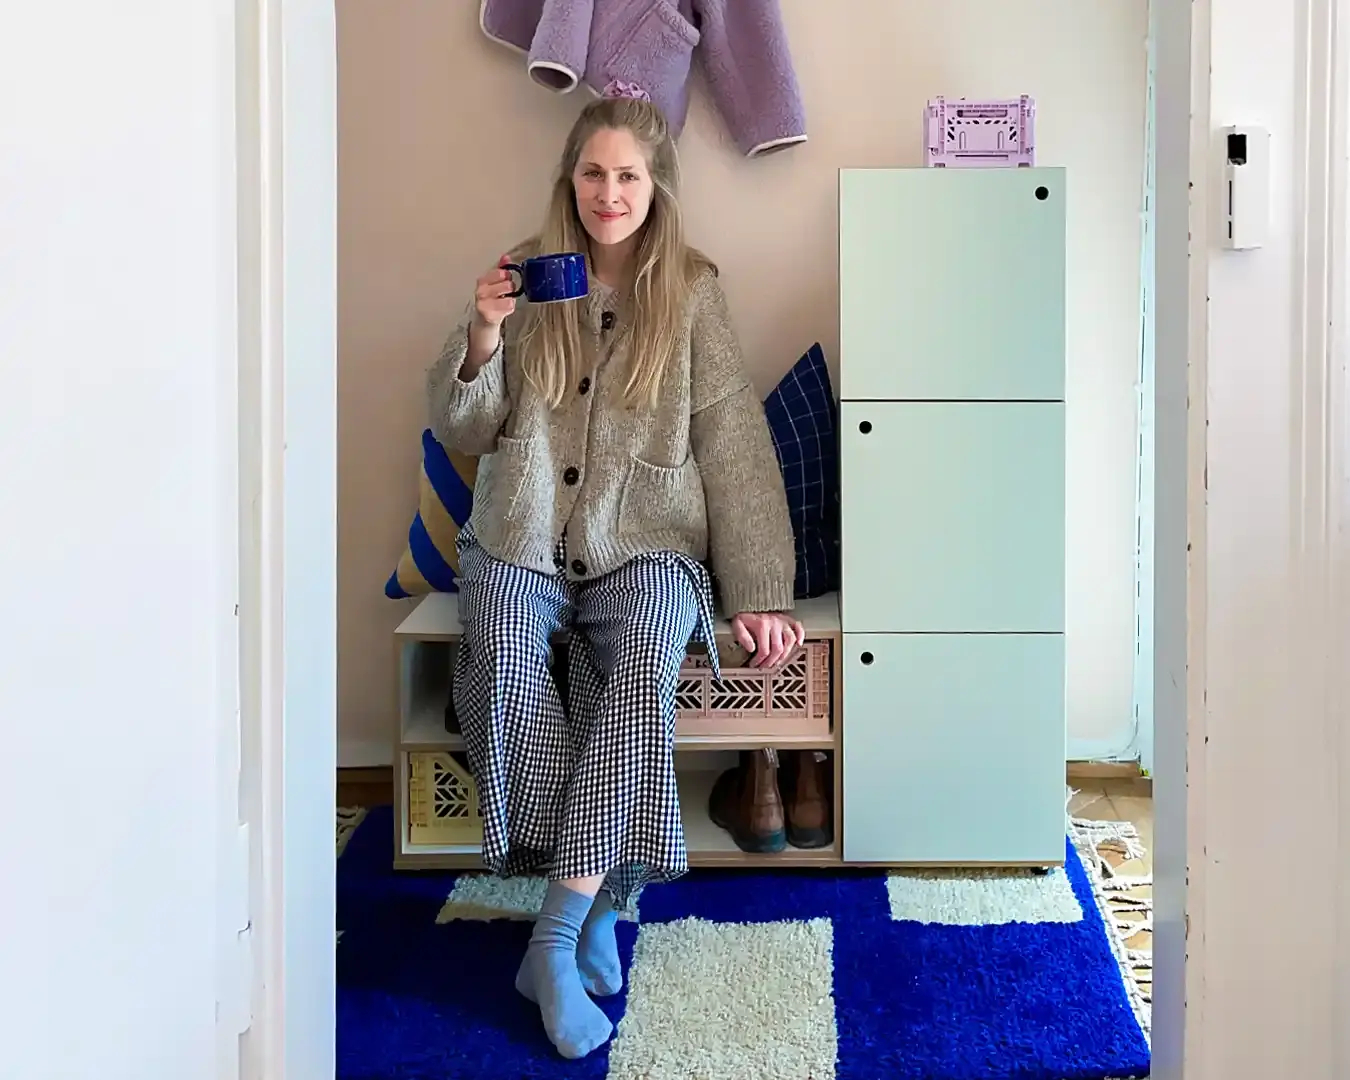 Koop, Flur-5x4-6, pajama clothing nightwear home adult wardrobe person happy covering consumer goods